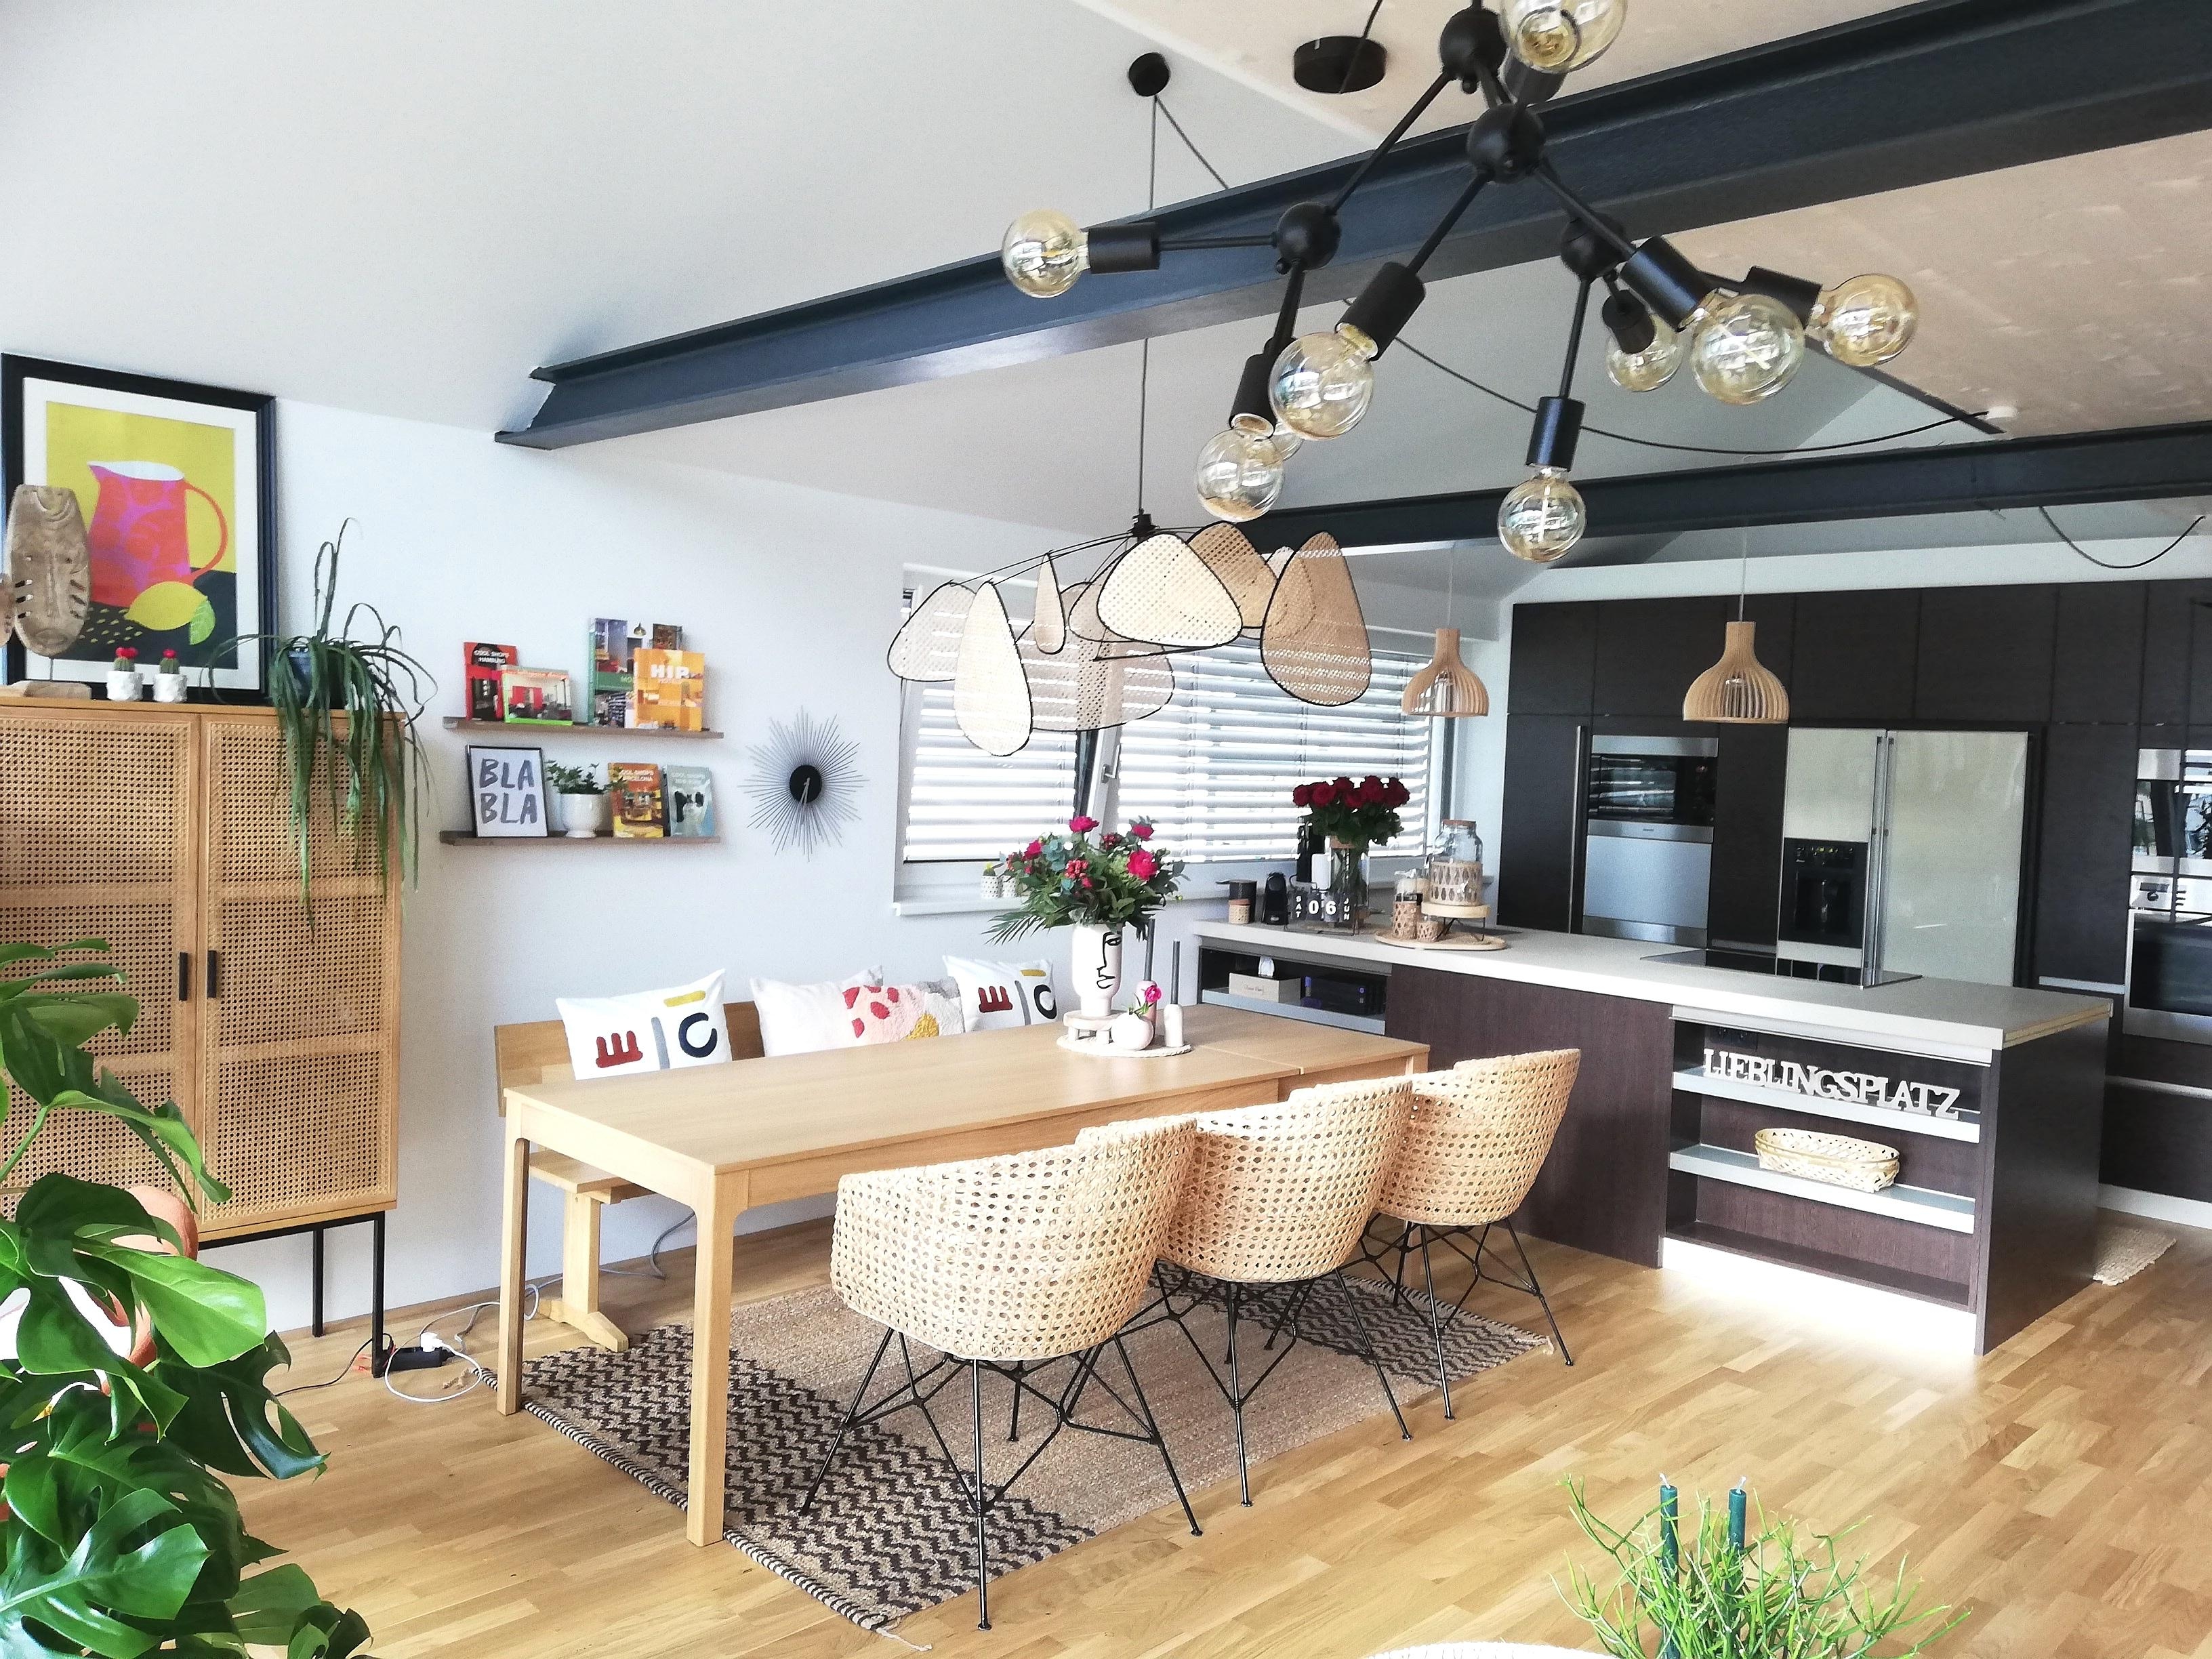 #kitchenlove #living #interior #interiordesign #home #kitchen #decor #decoration #design 